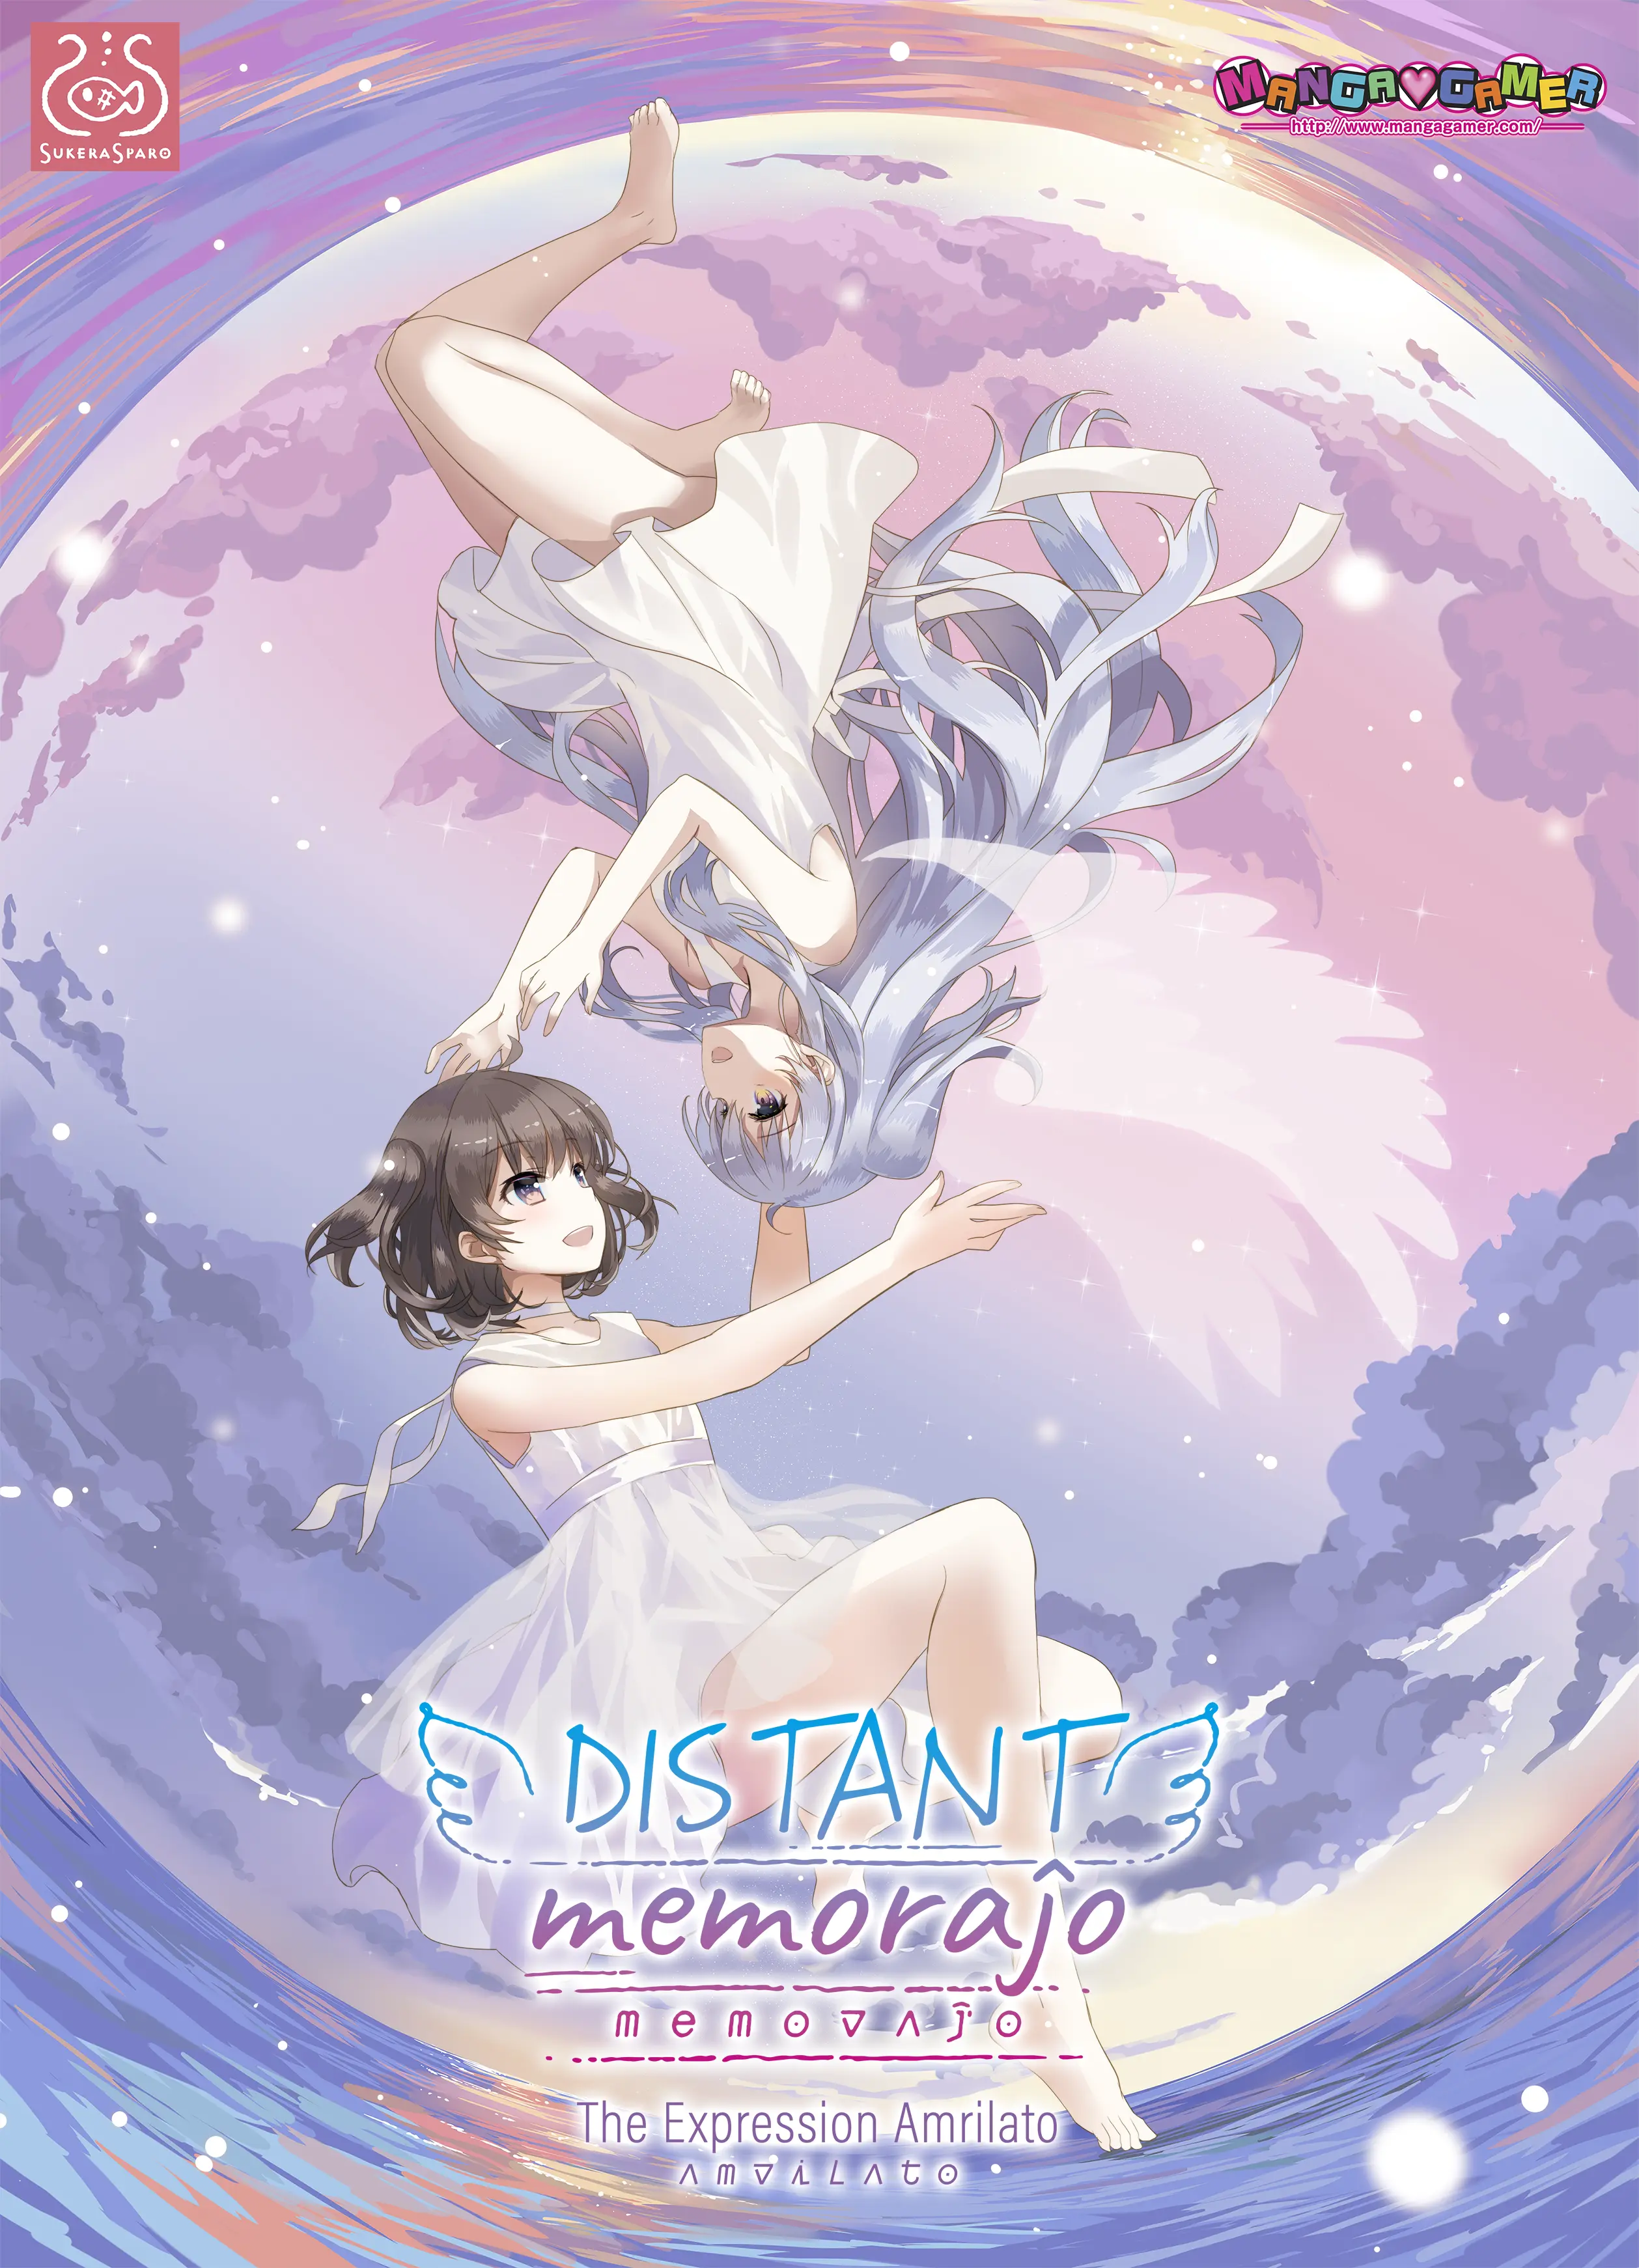 Distant Memoraĵo main image